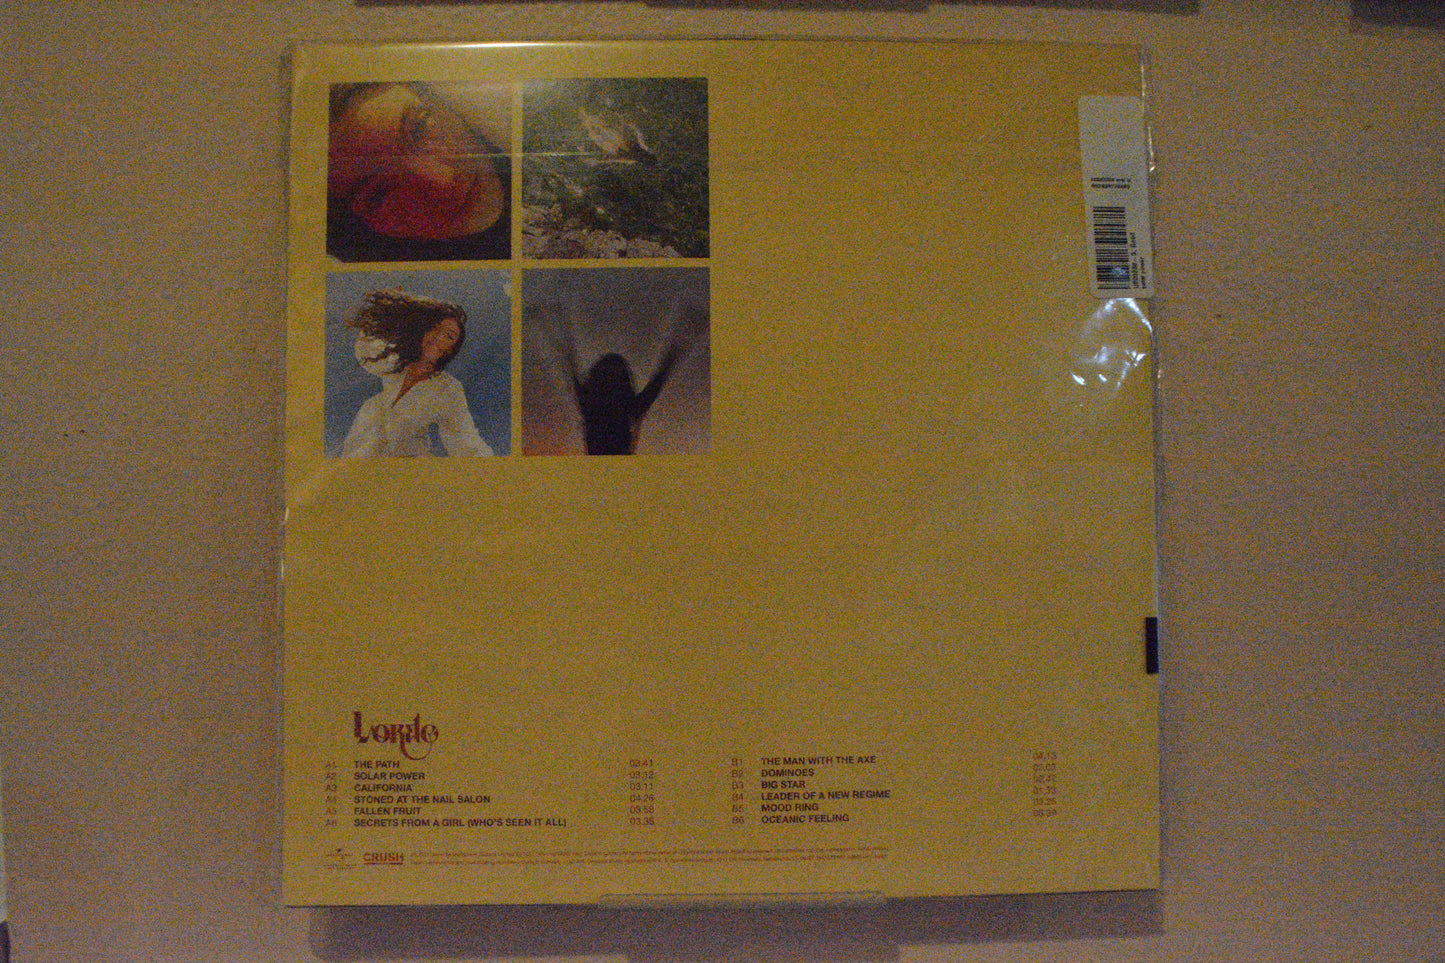 Lorde - Solar Power LP